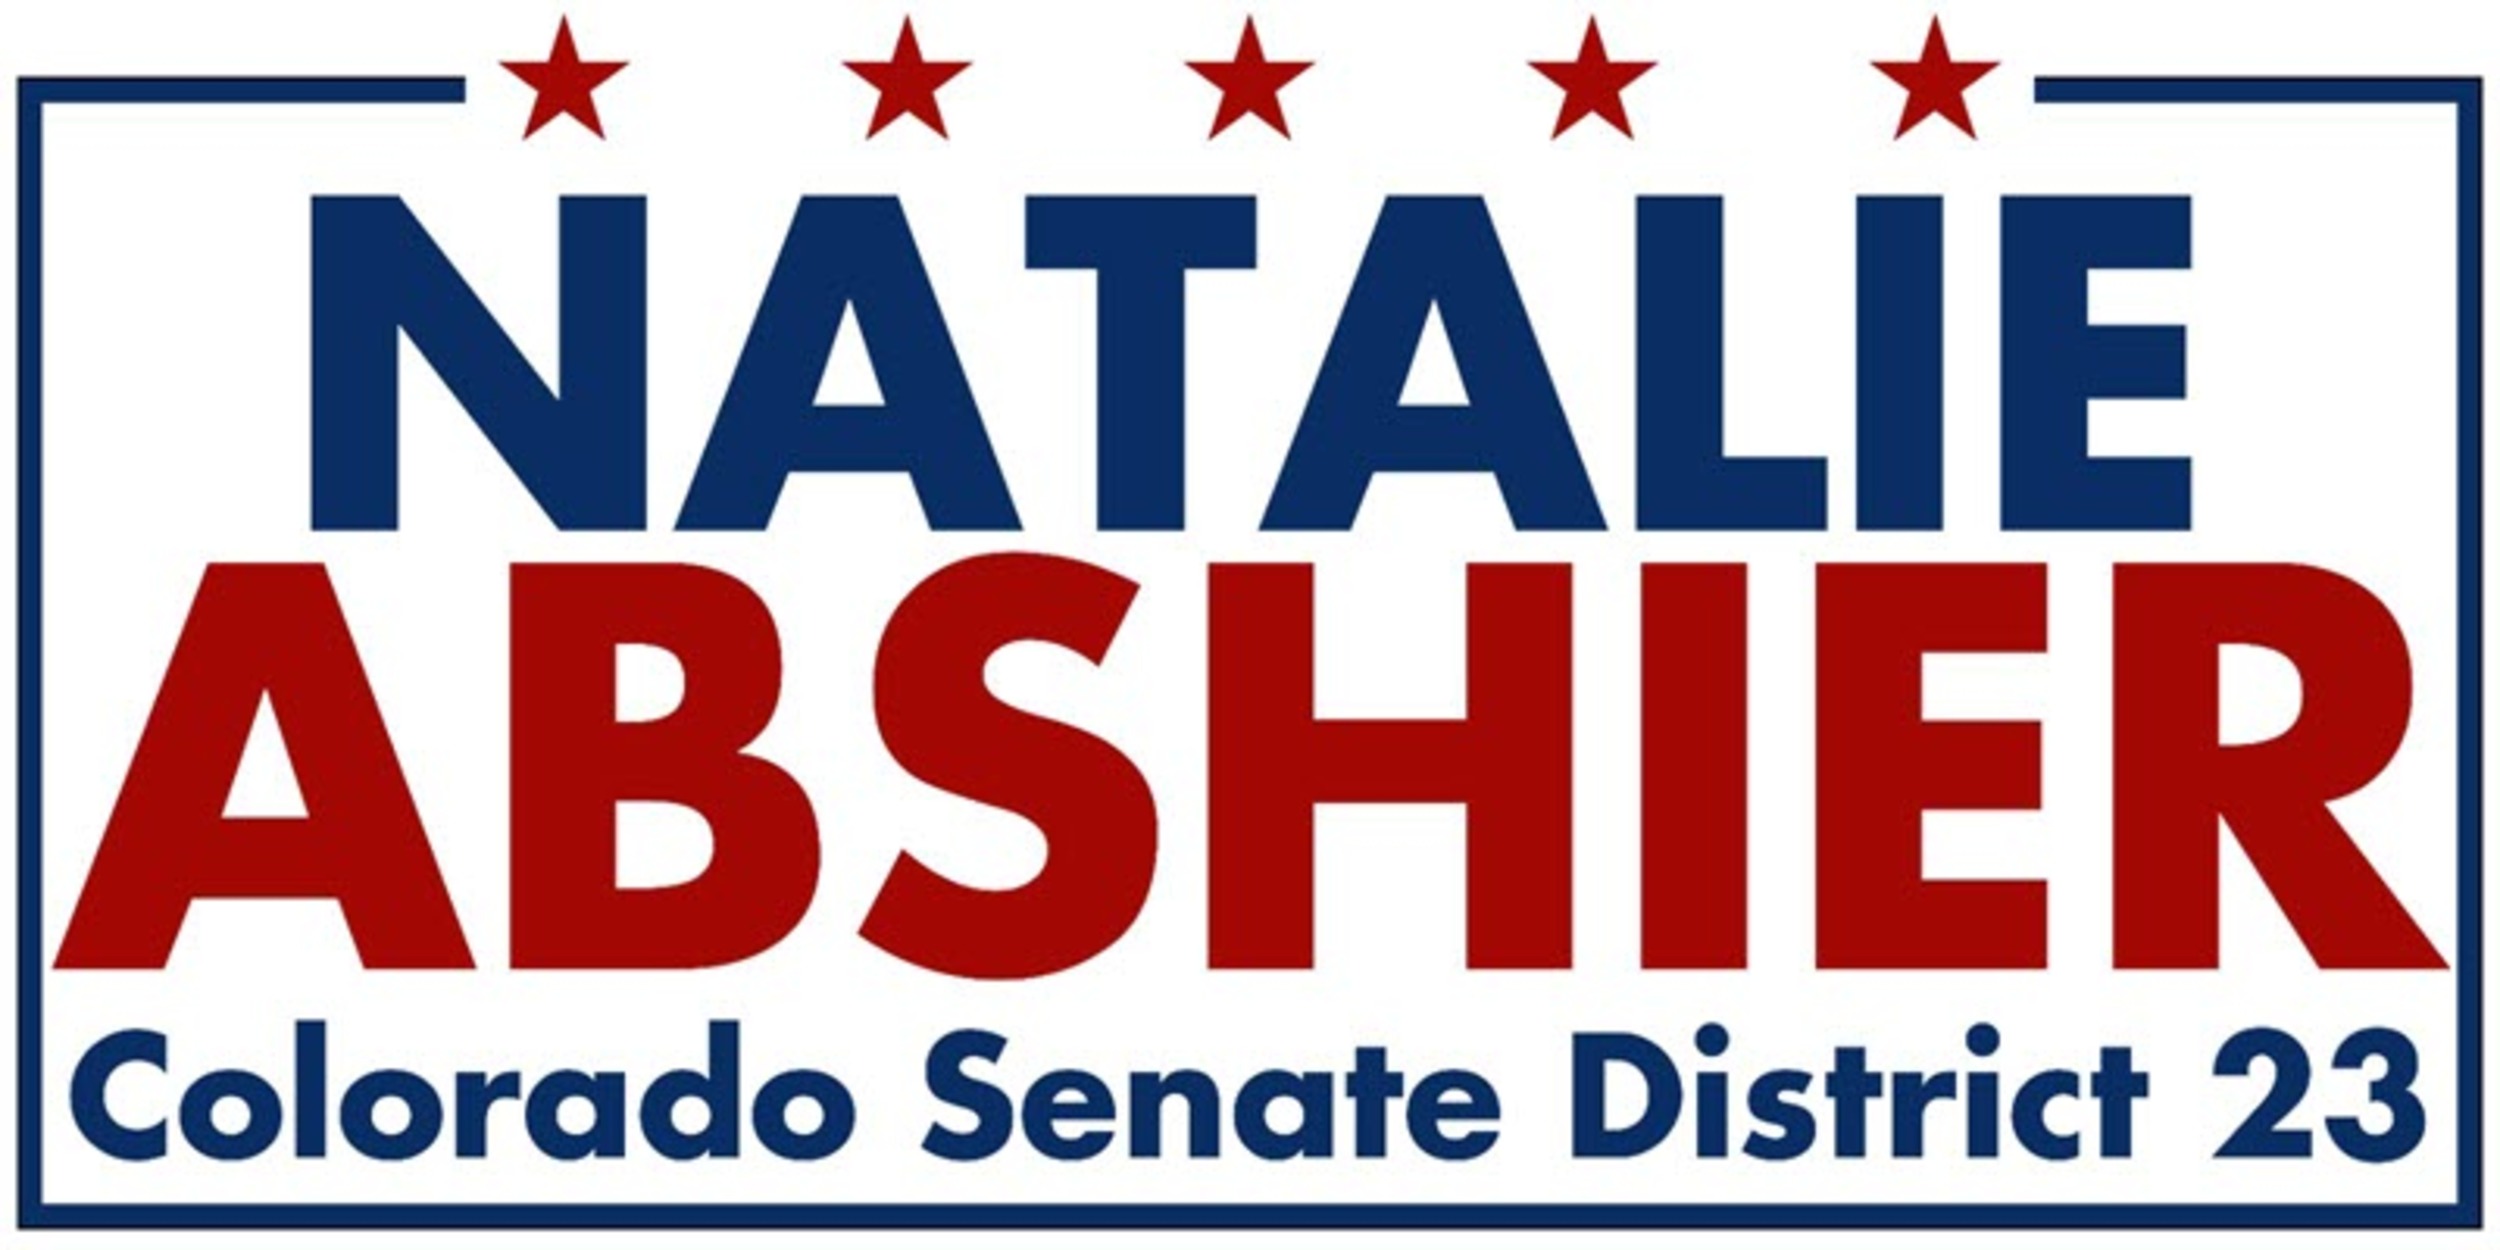 Natalie Abshier for Colorado Senate District 23